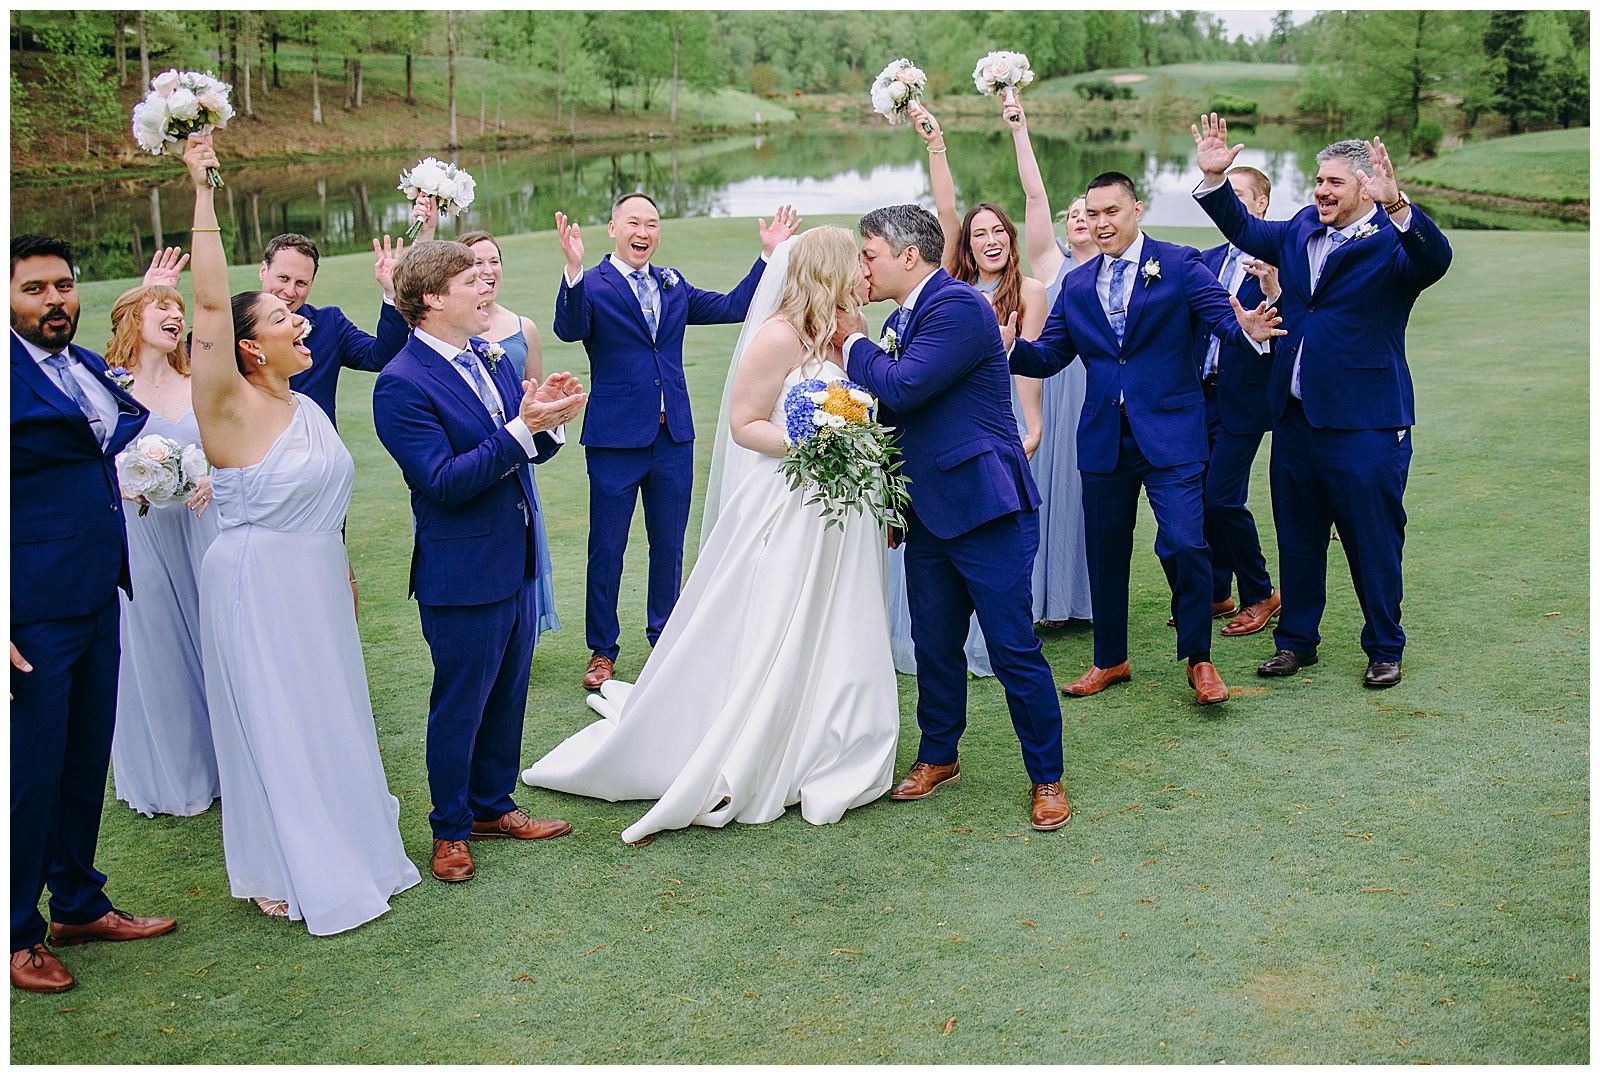 fun bridal party photos, groomsmen and bridesmaids wearing blue